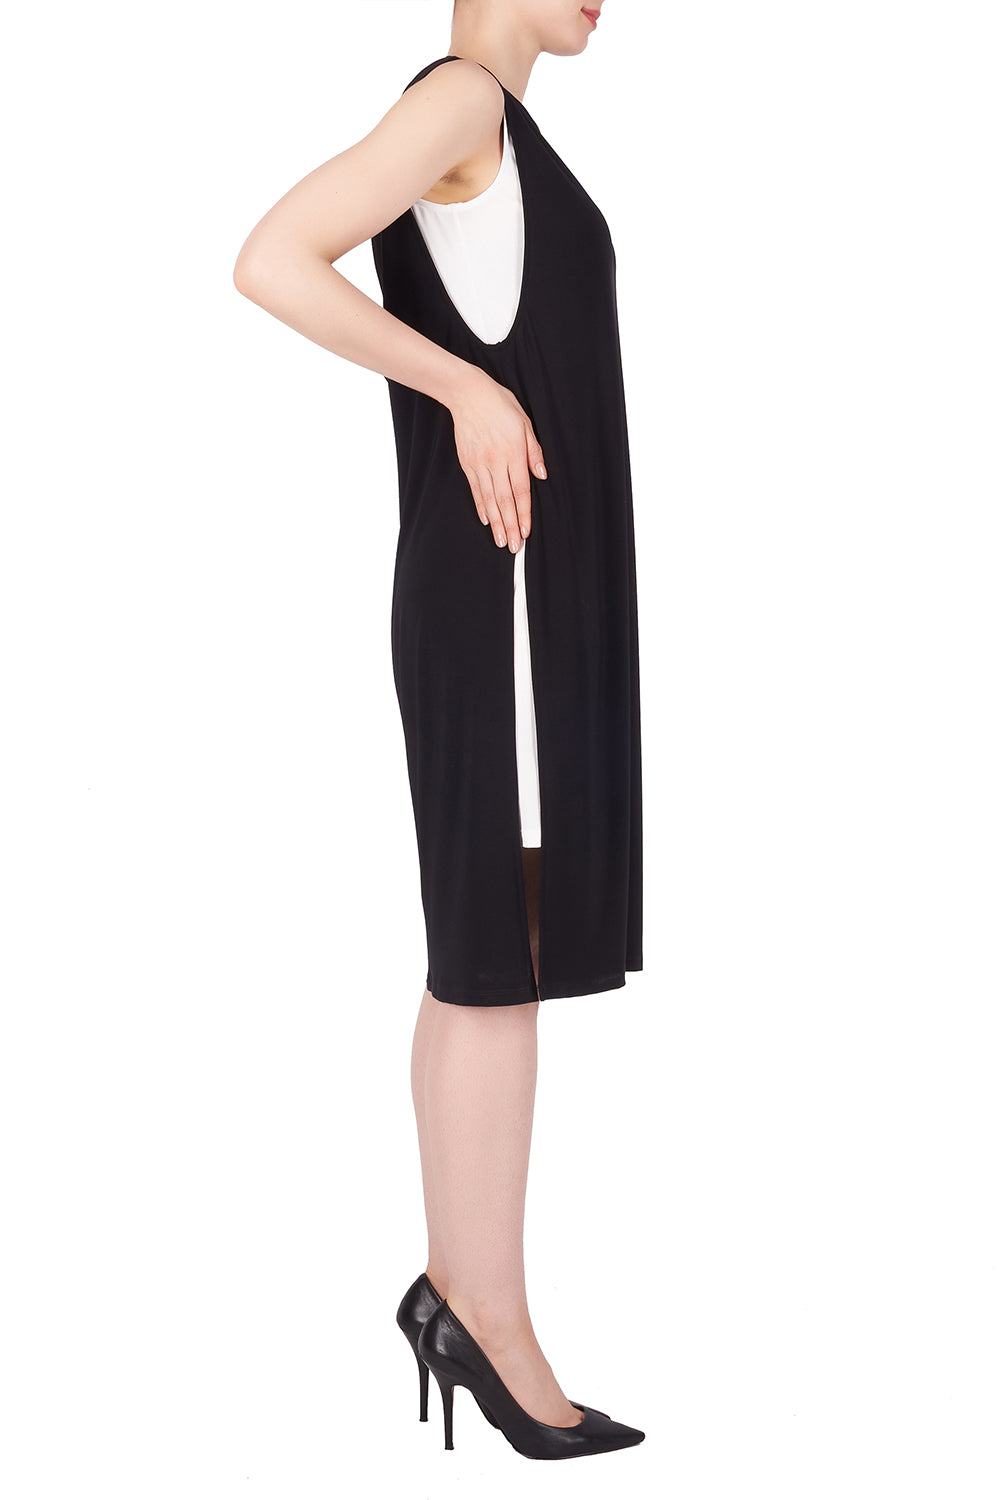 Joseph Ribkoff Black-Vanilla Dress Style 191001